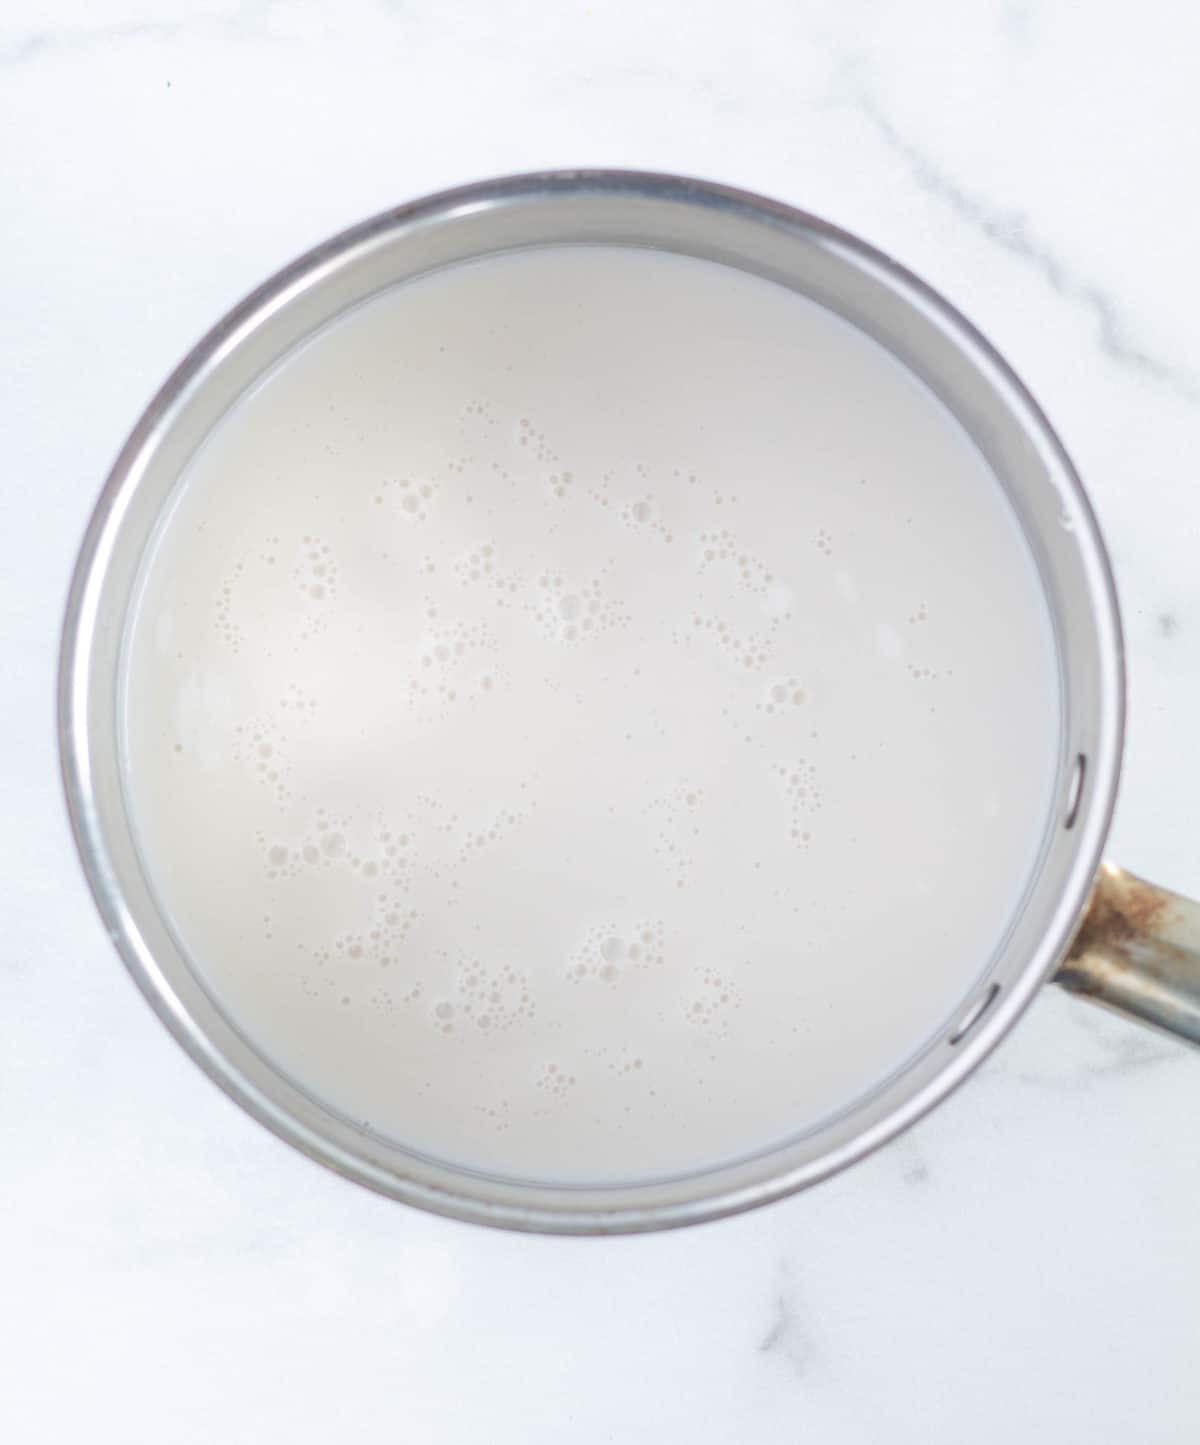 warmed milk in saucepan